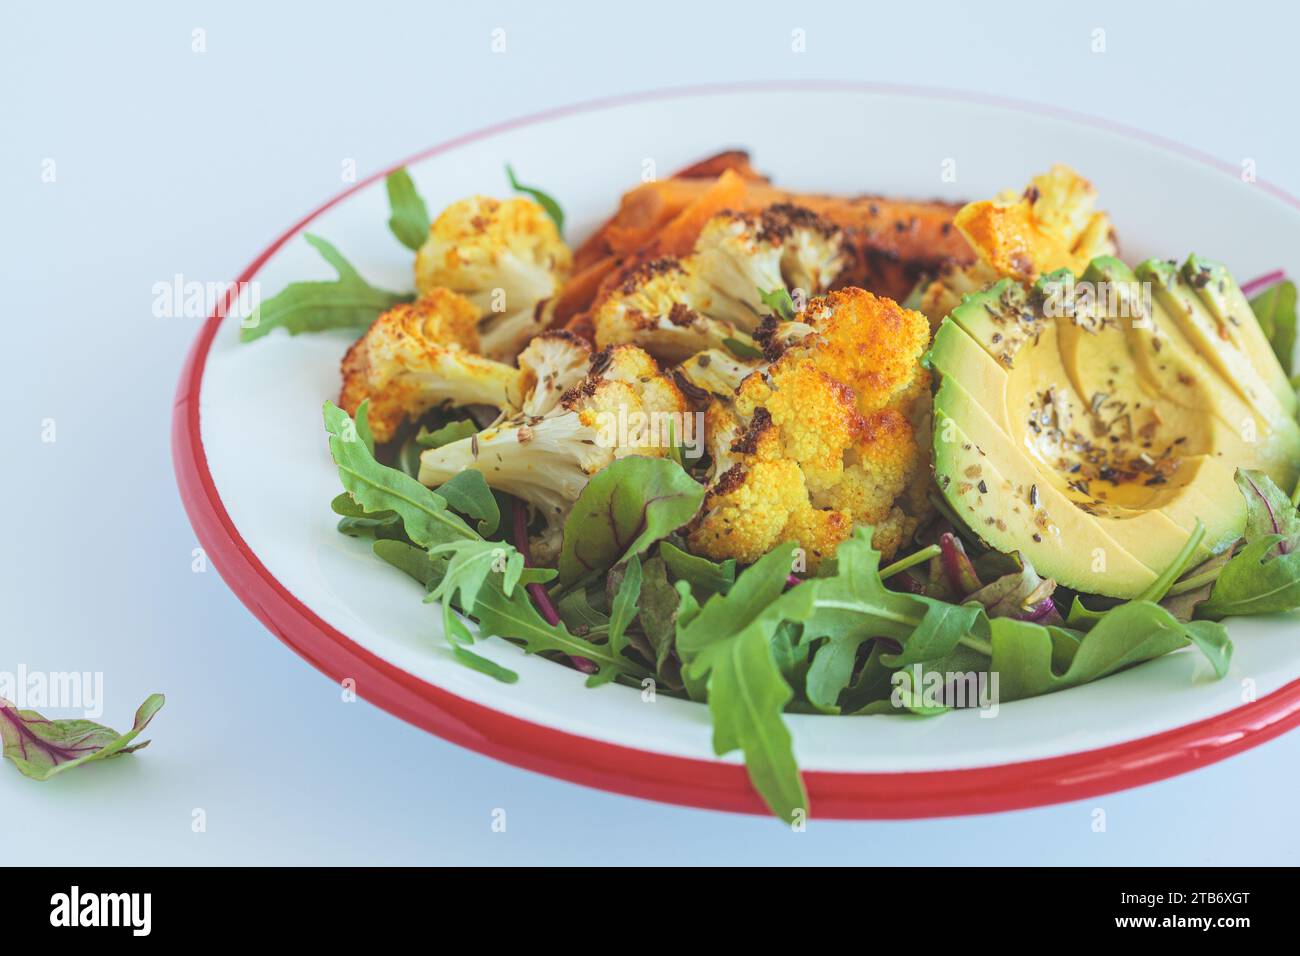 Warm winter salad with roasted cauliflower, sweet potatoes and avocado, close-up. Stock Photo